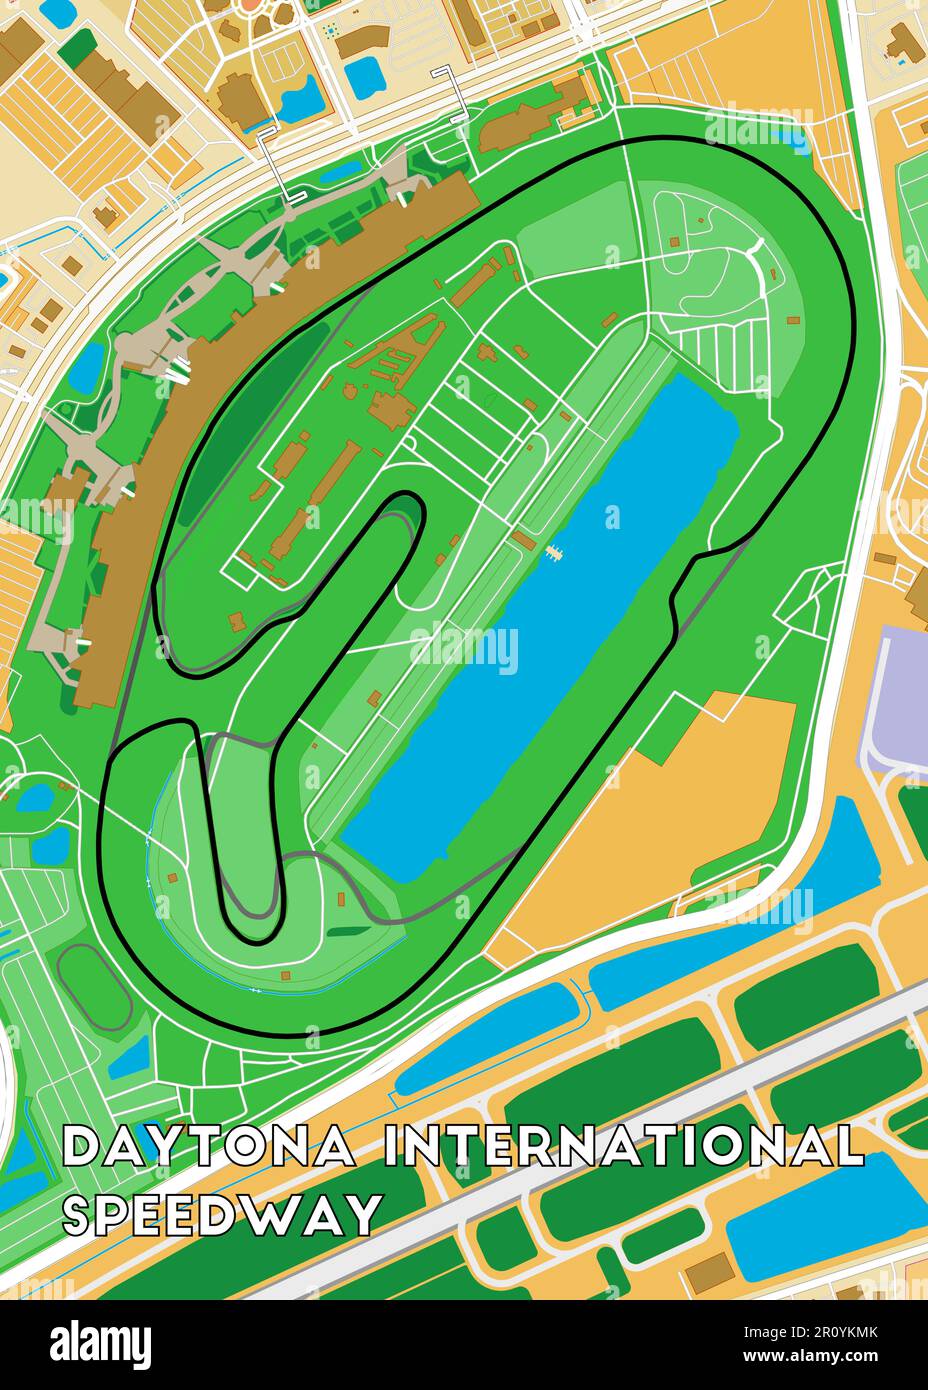 Daytona International Speedway - Road Course Stock Vector